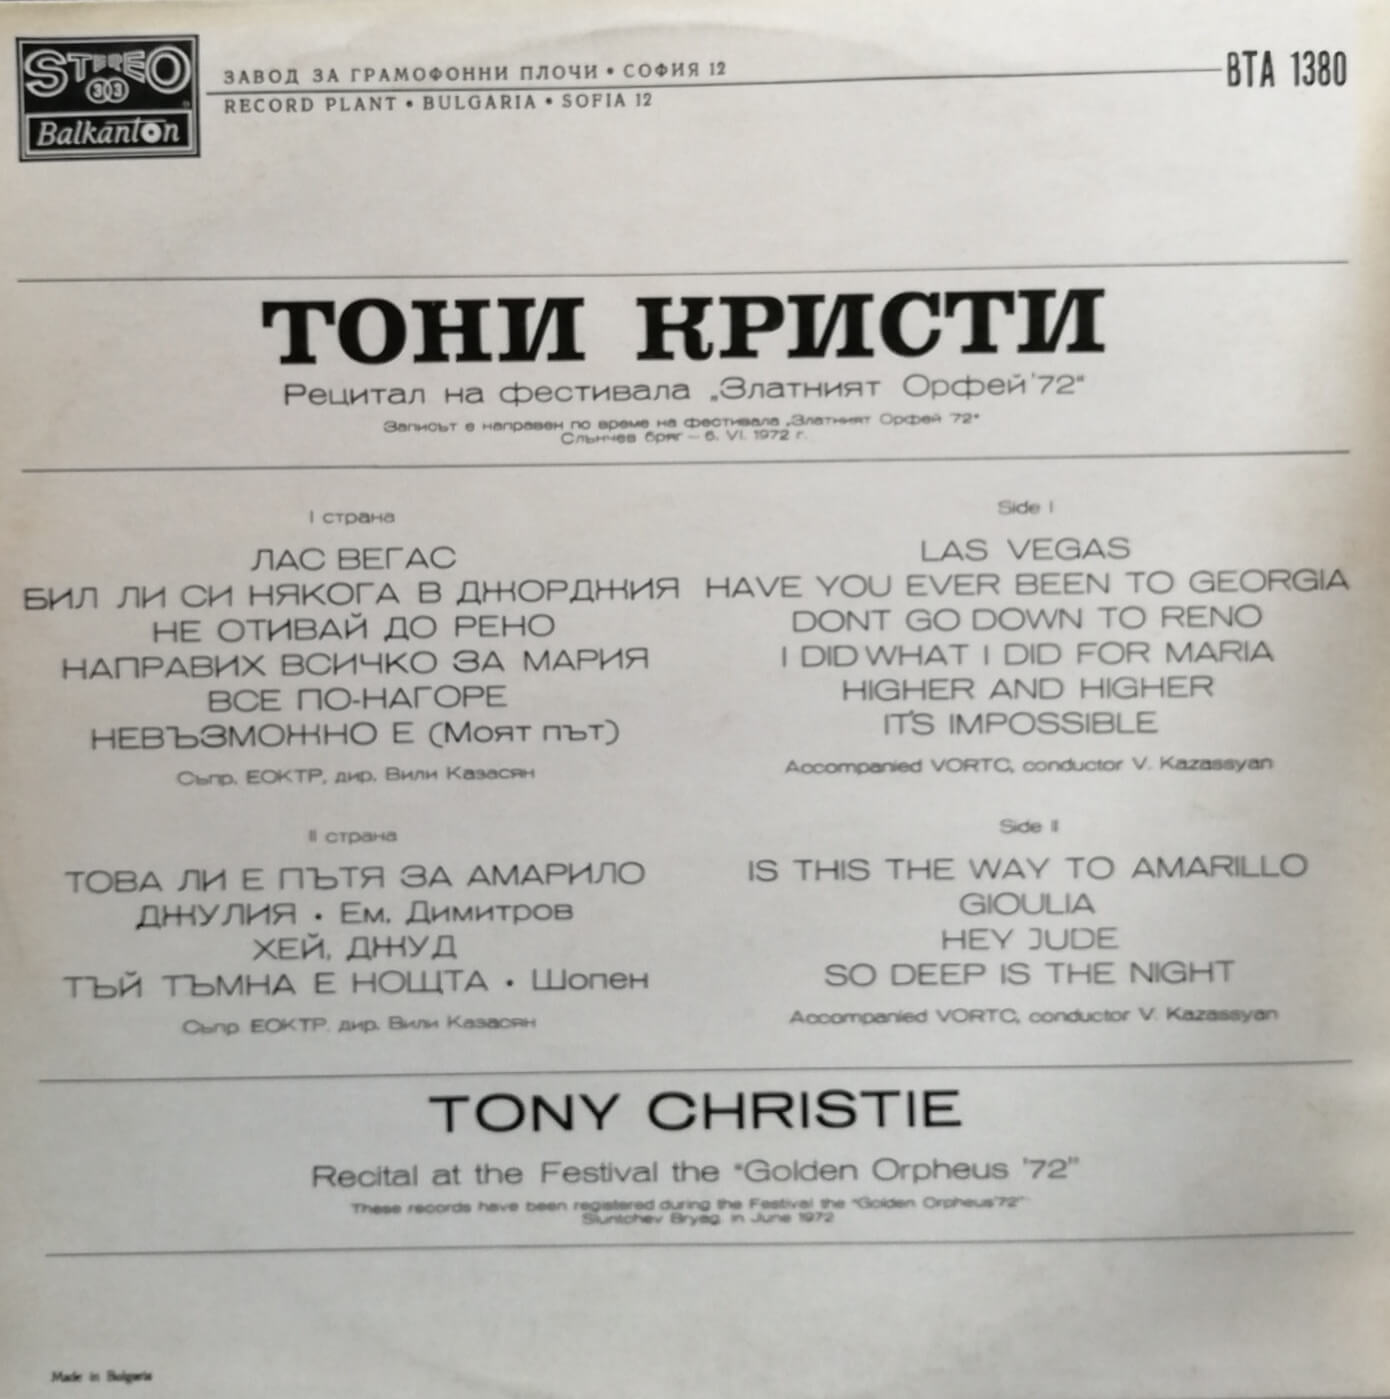 Okładka płyty winylowej artysty Tony Christie o tytule Recital At The Festival The "Golden Orpheus ‘72"